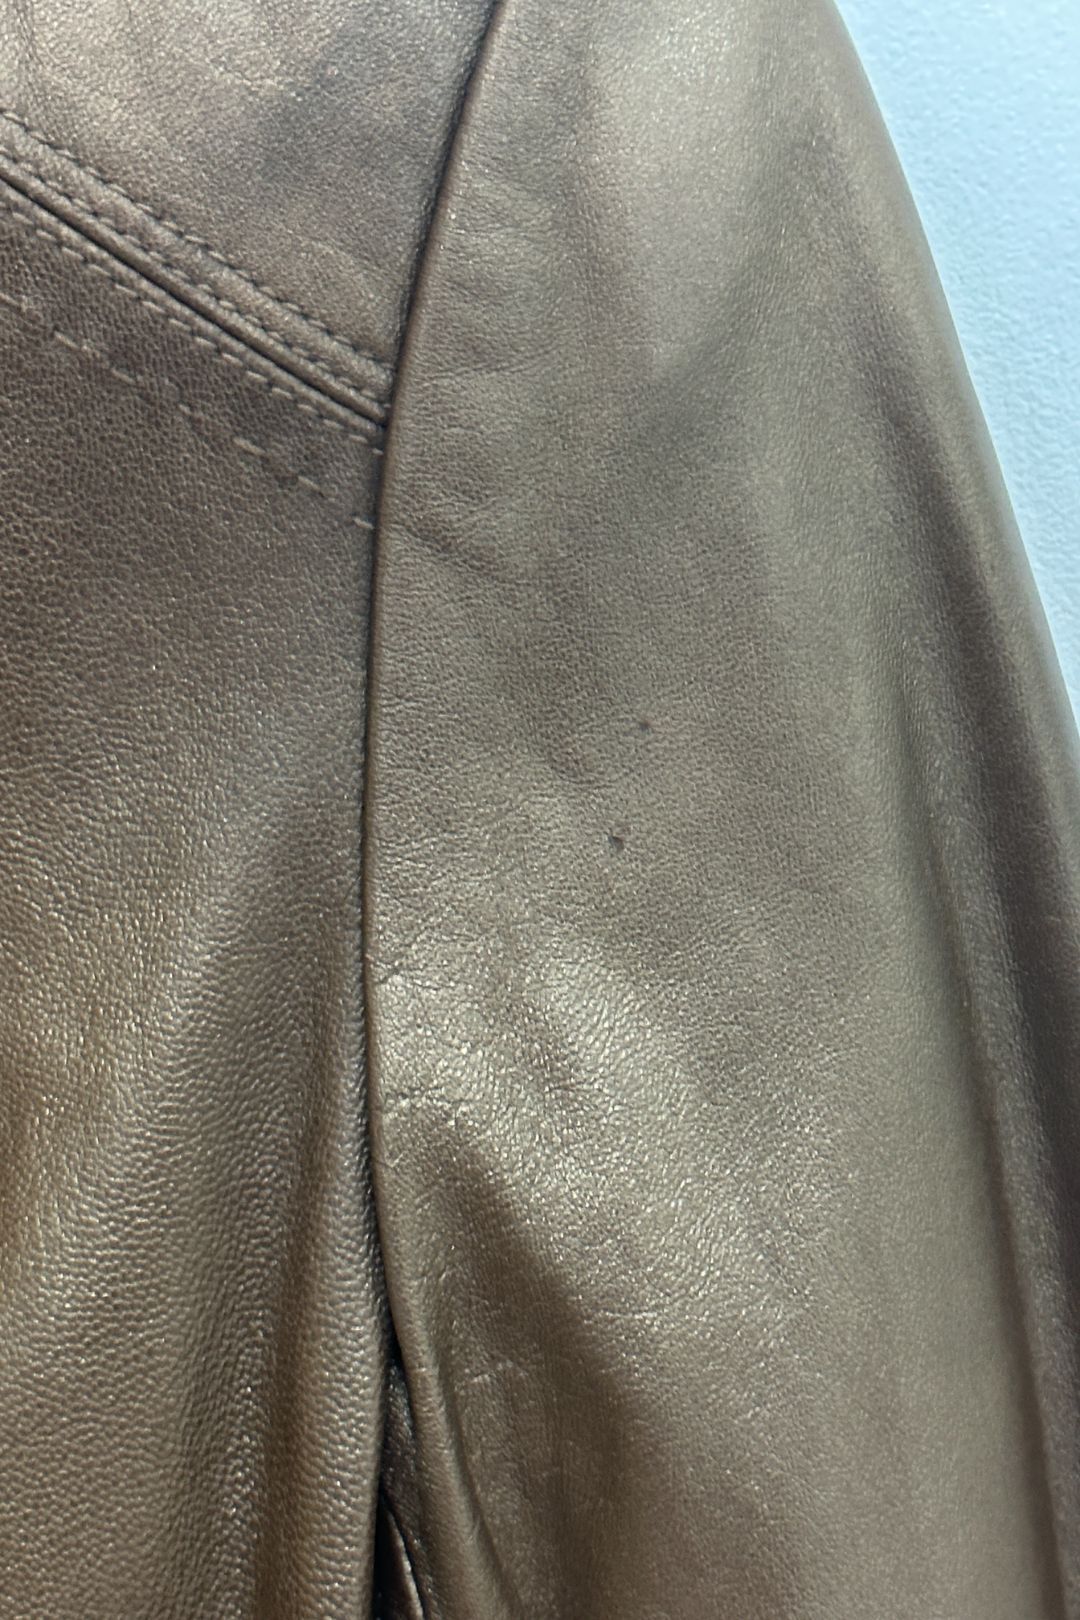 Elie Tahari  Bronze High Collar Leather Jacket 